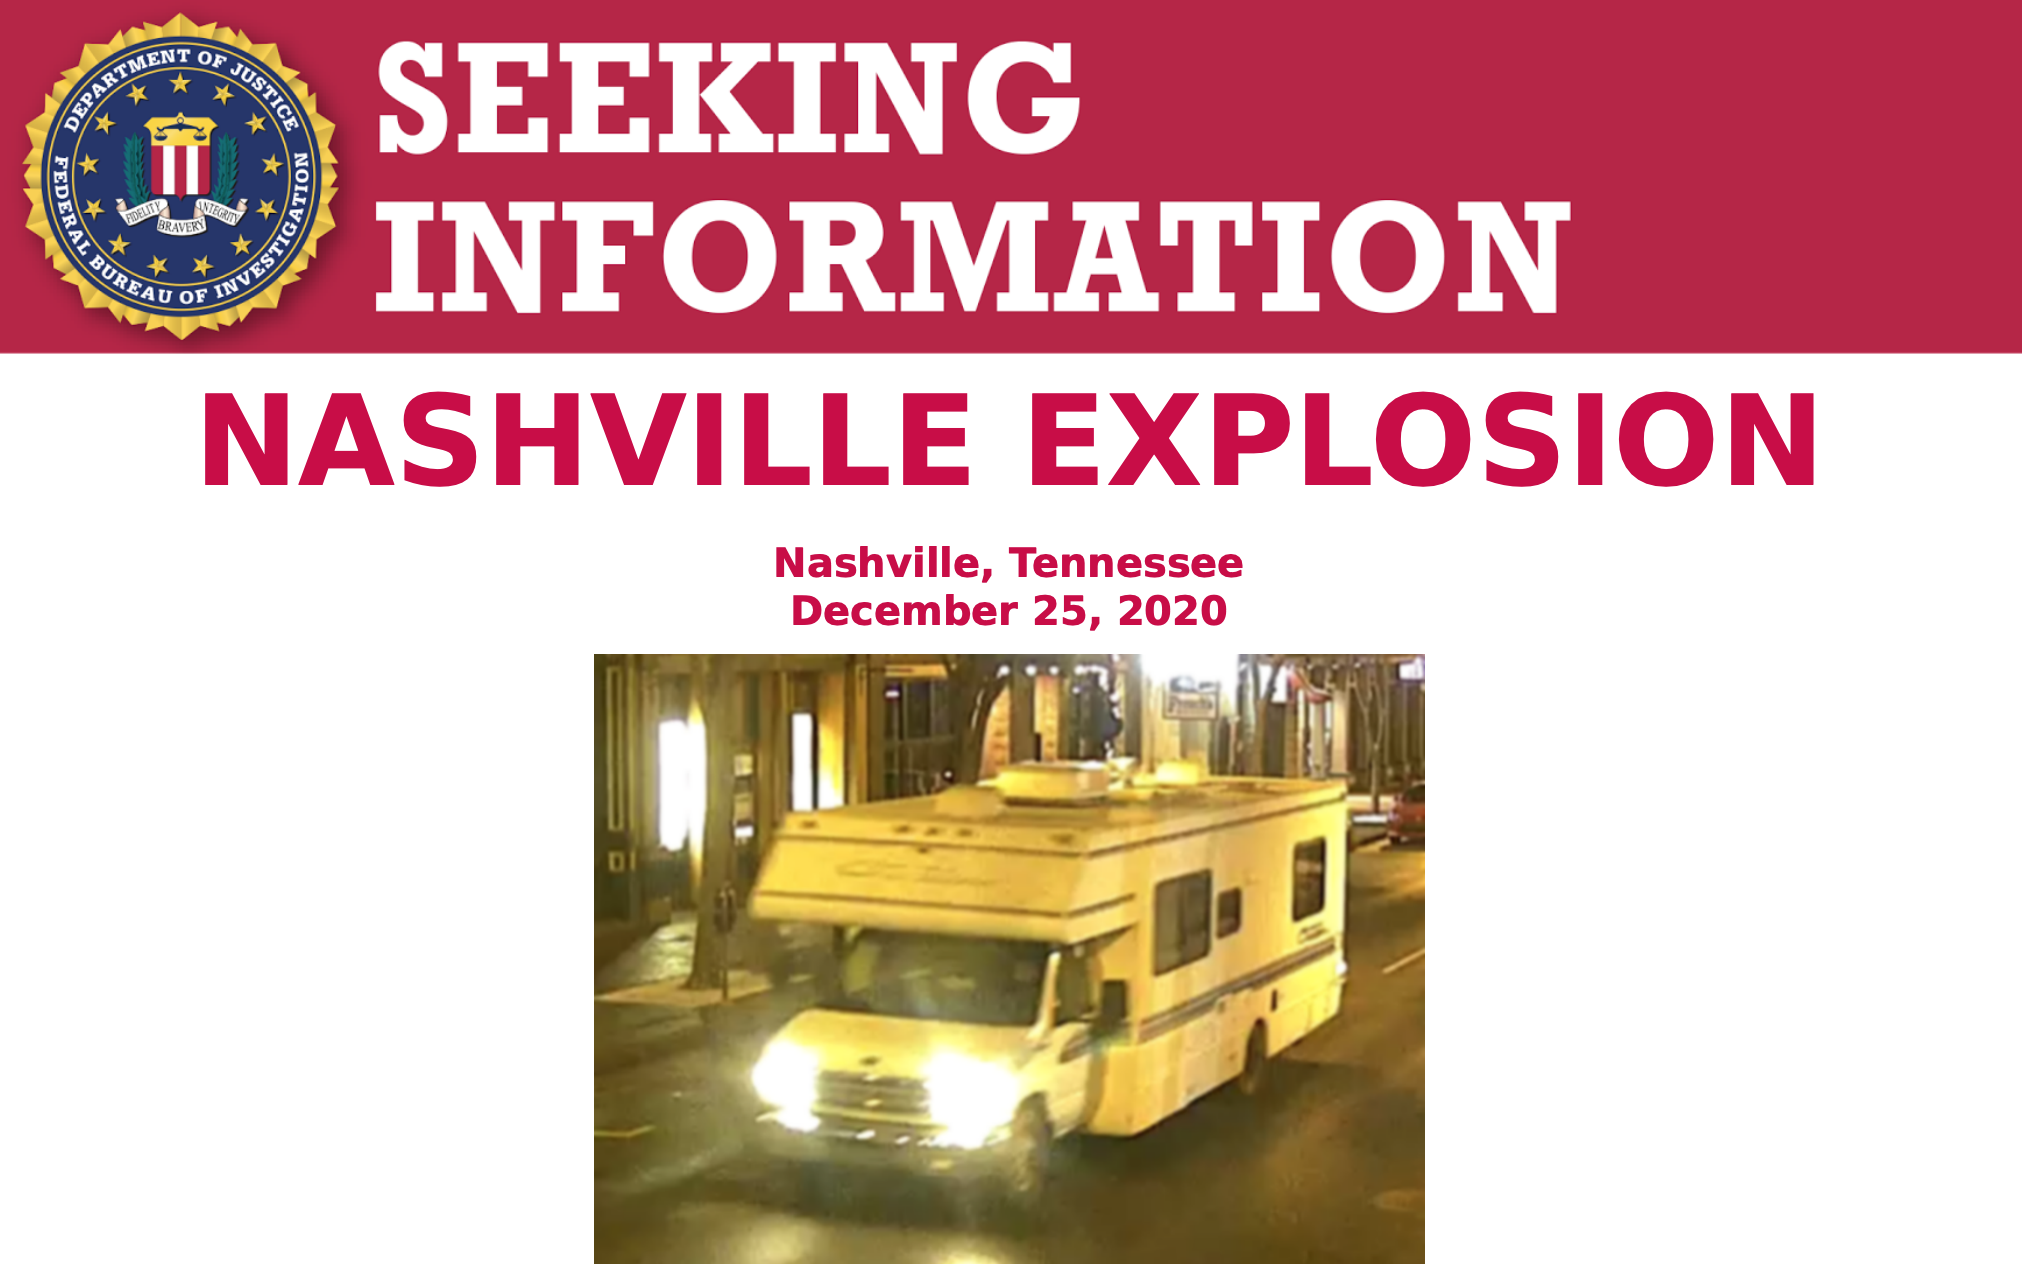 Nashville Explosion Seeking Information Poster